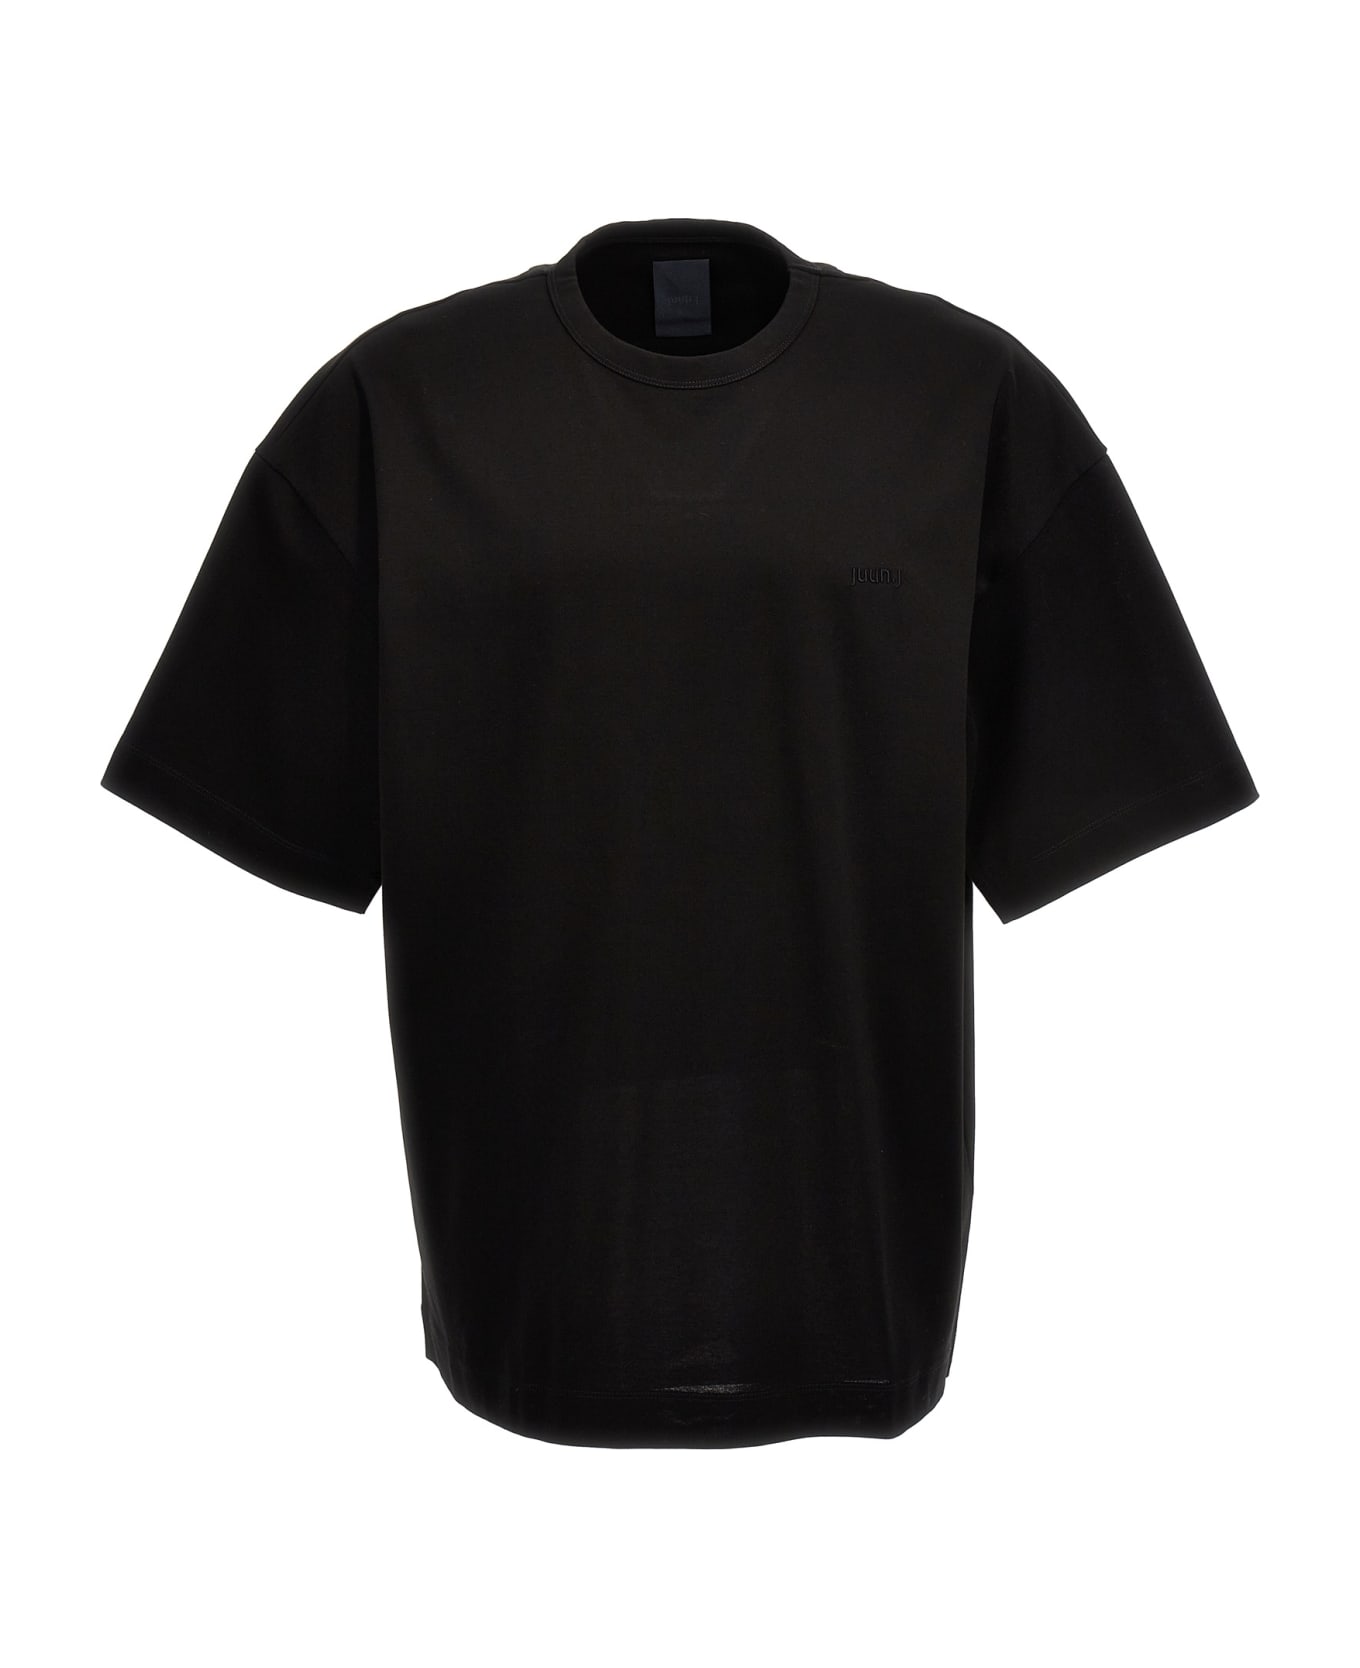 Juun.J Print And Embroidery T-shirt - Black  